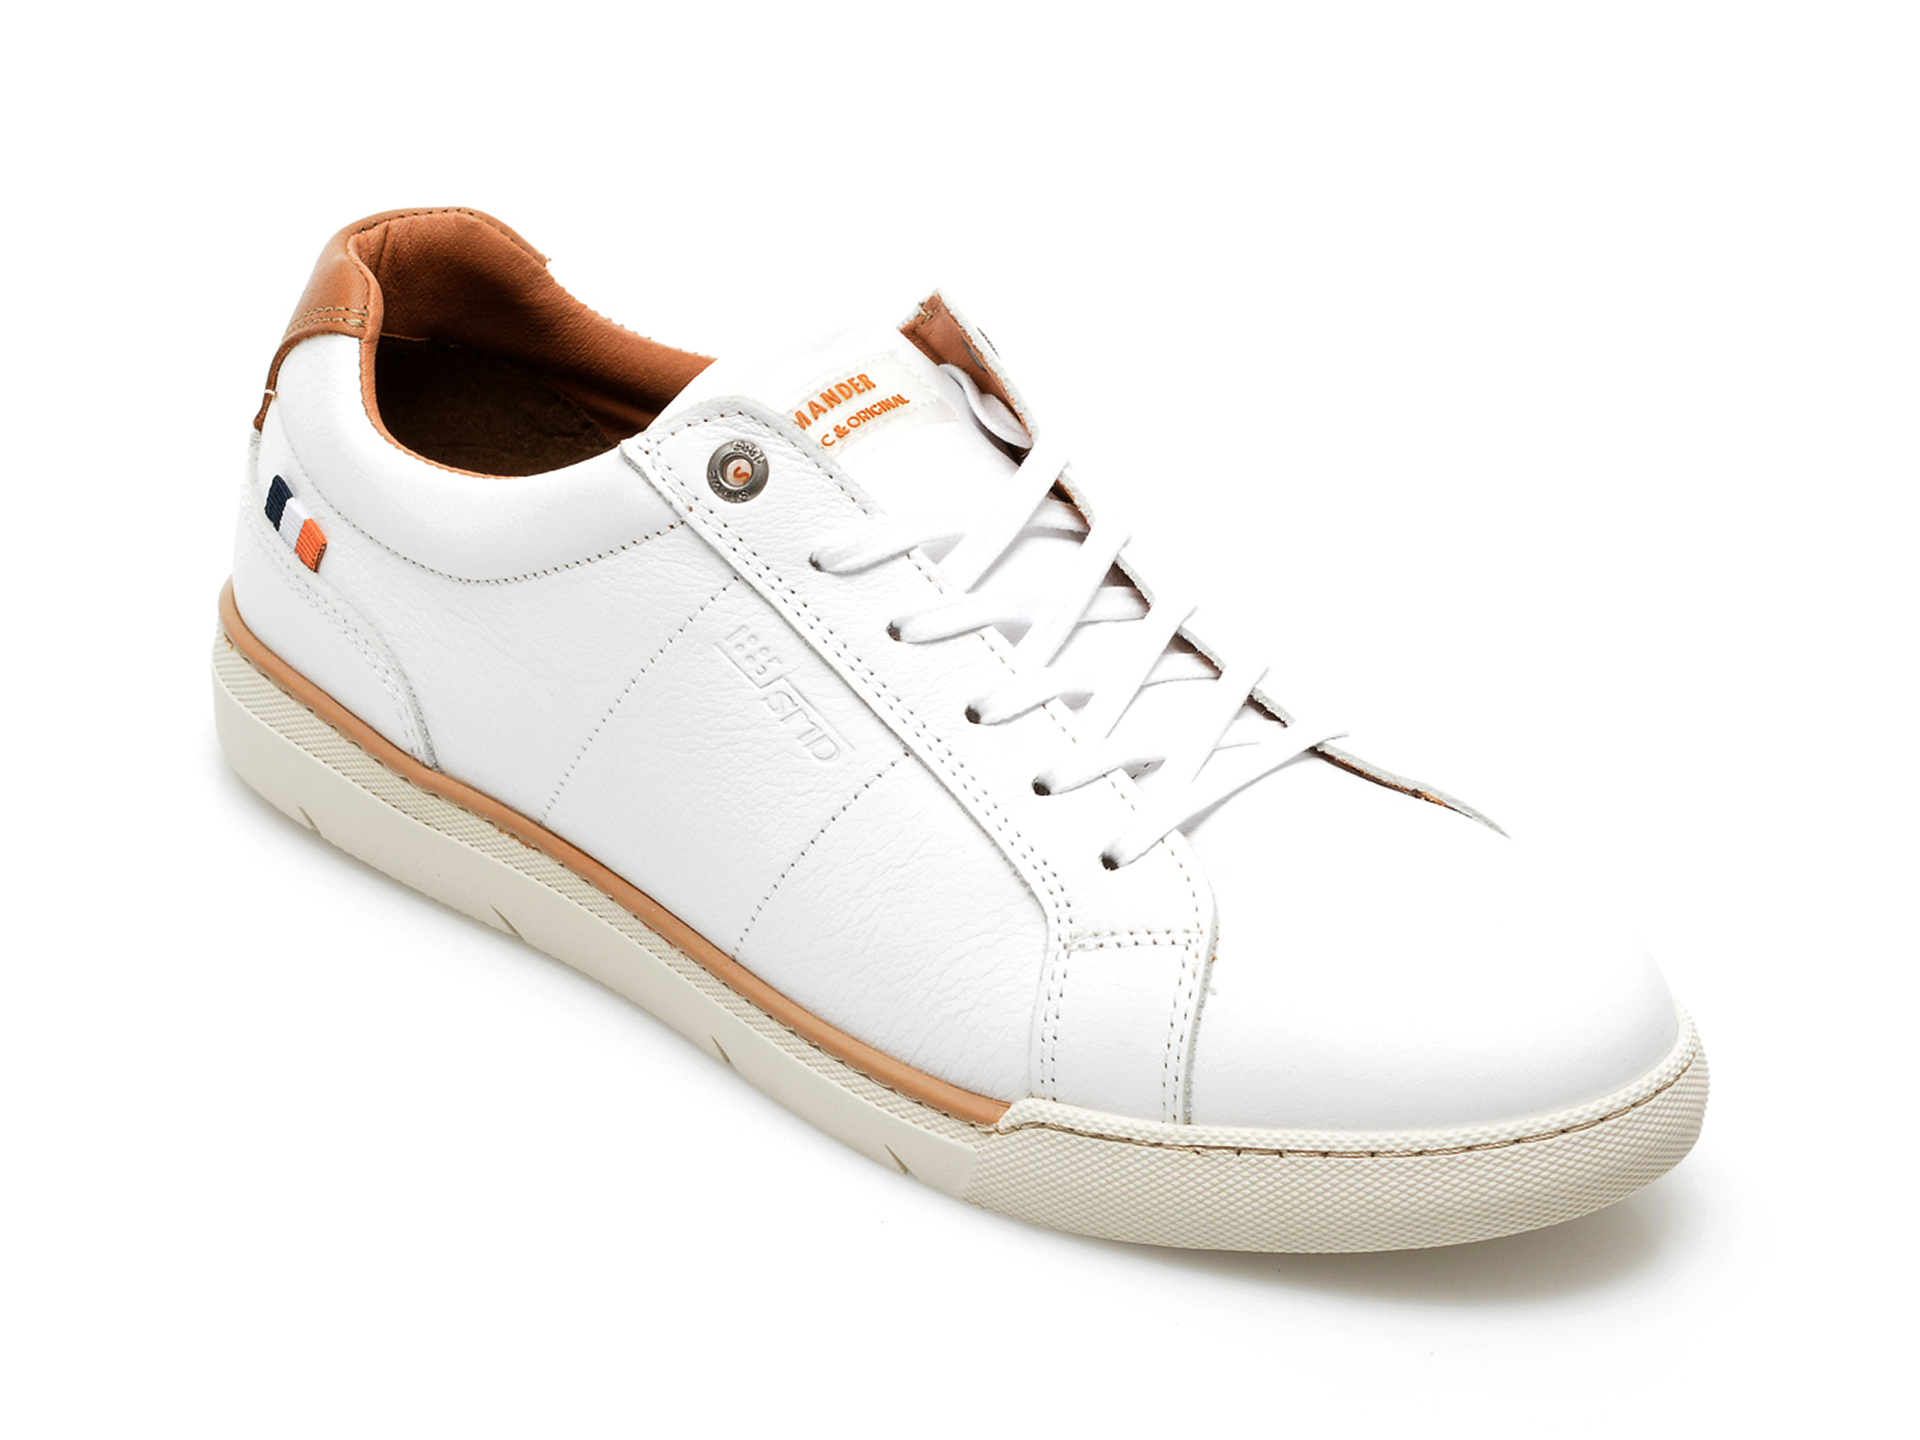 Pantofi sport SALAMANDER albi, 63102, din piele naturala otter.ro otter.ro